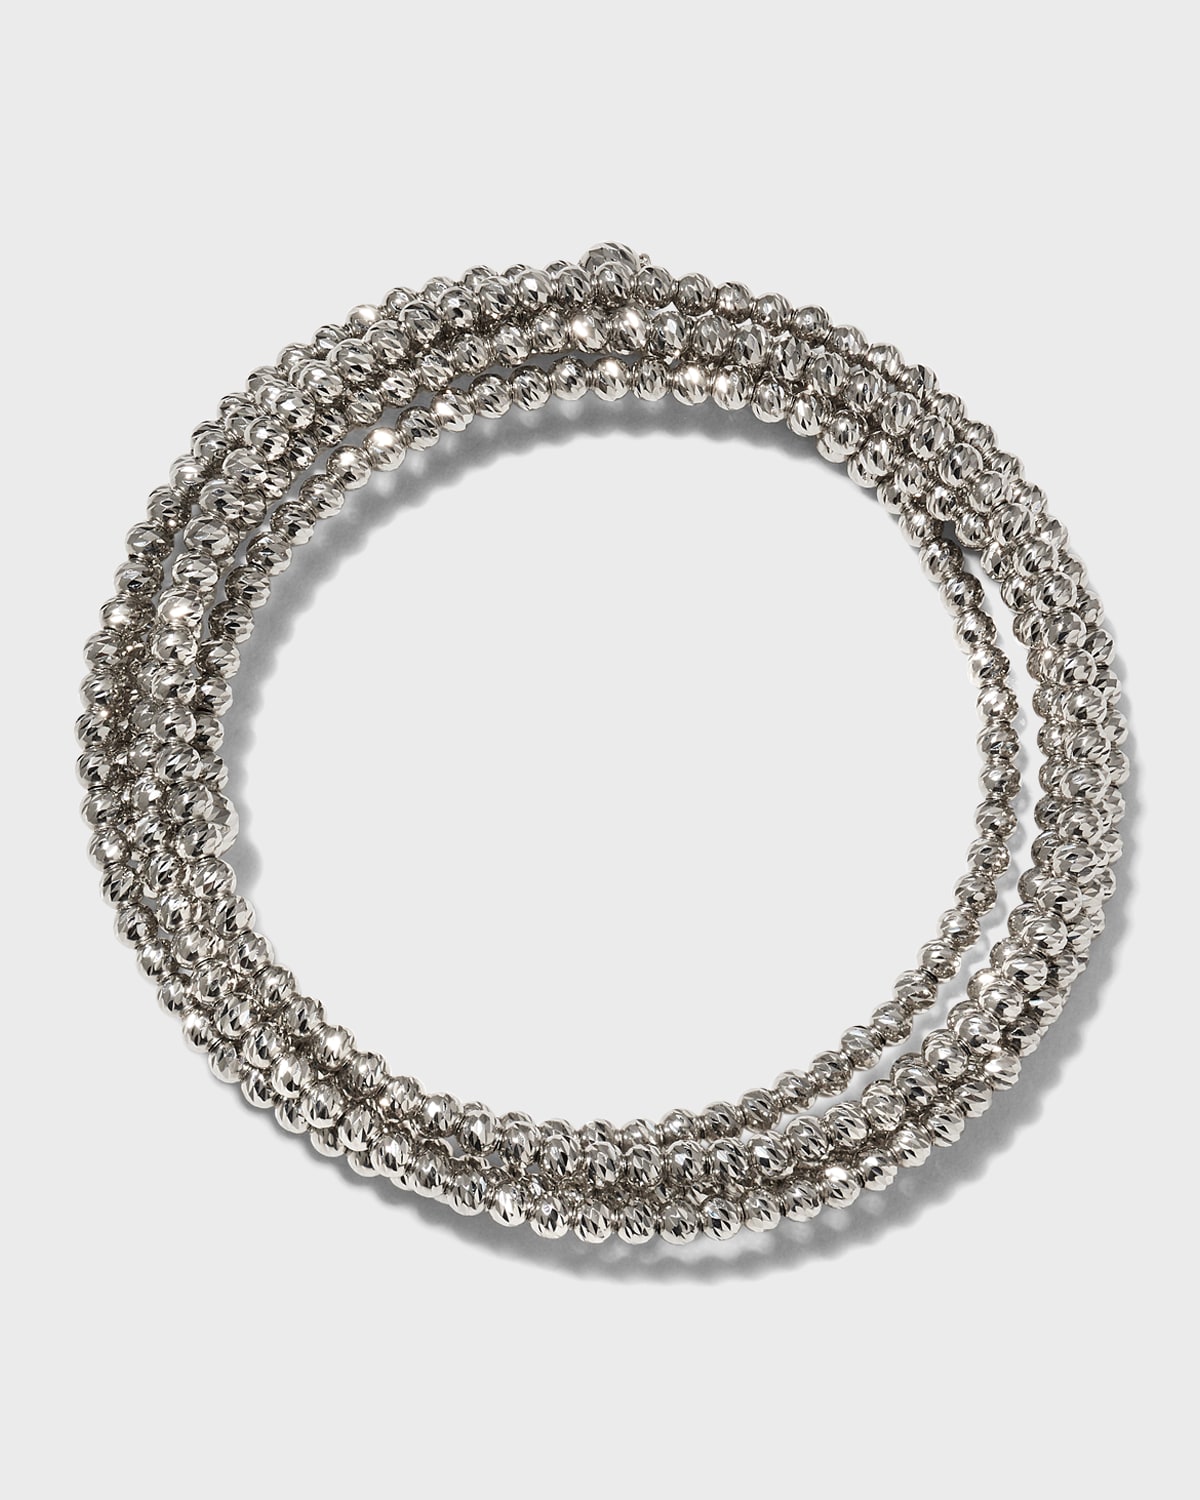 Platinum Loop Bracelet, 32.5"L